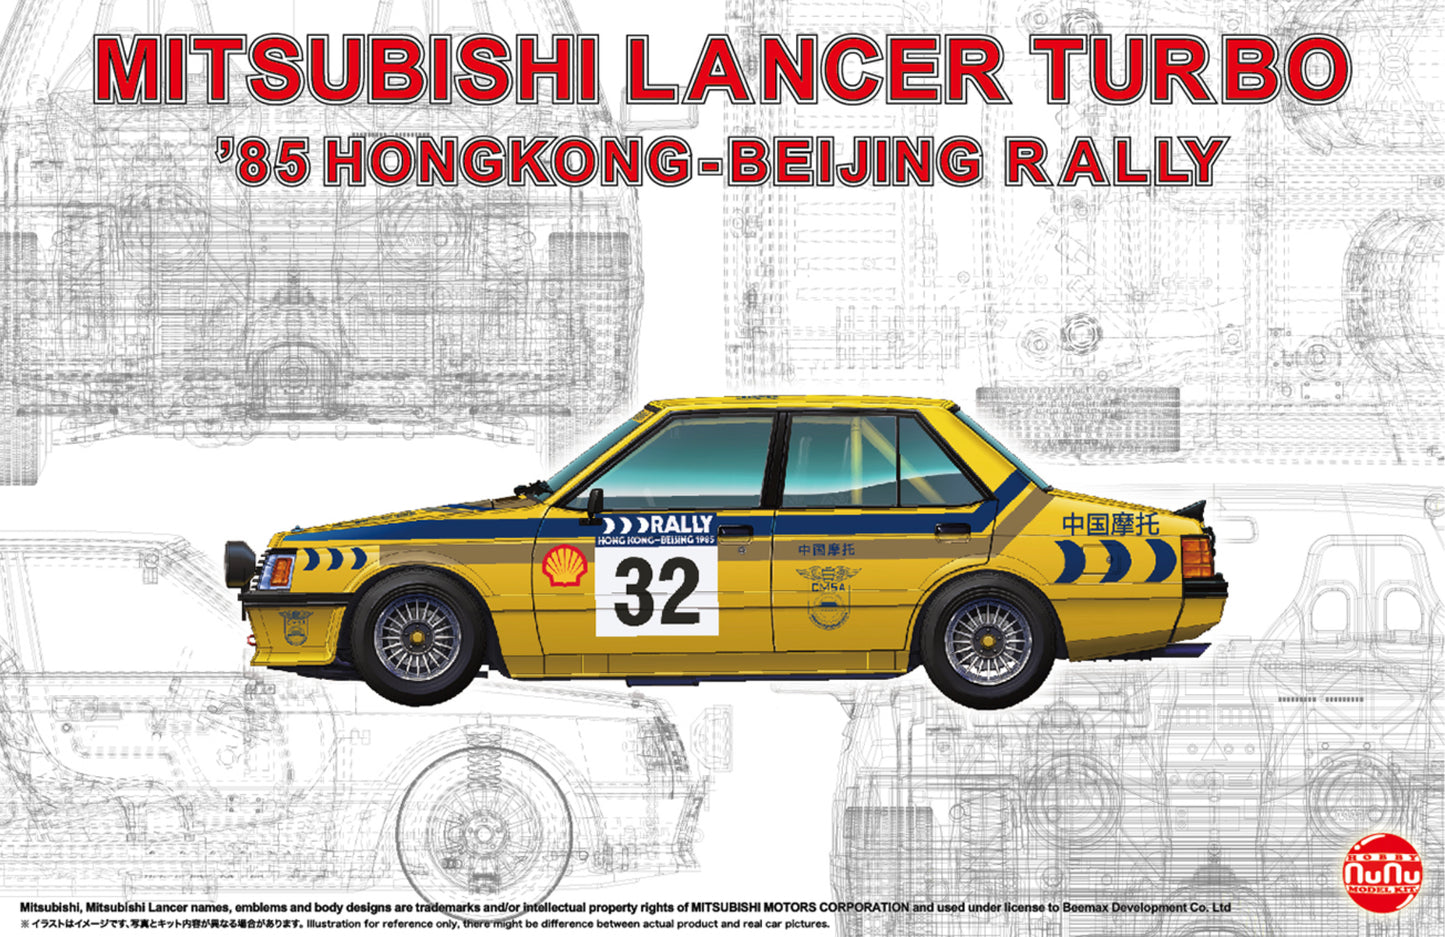 MITSUBISHI LANCER TURBO - 555 - 85 HONGKONG - BEIJING RALLY